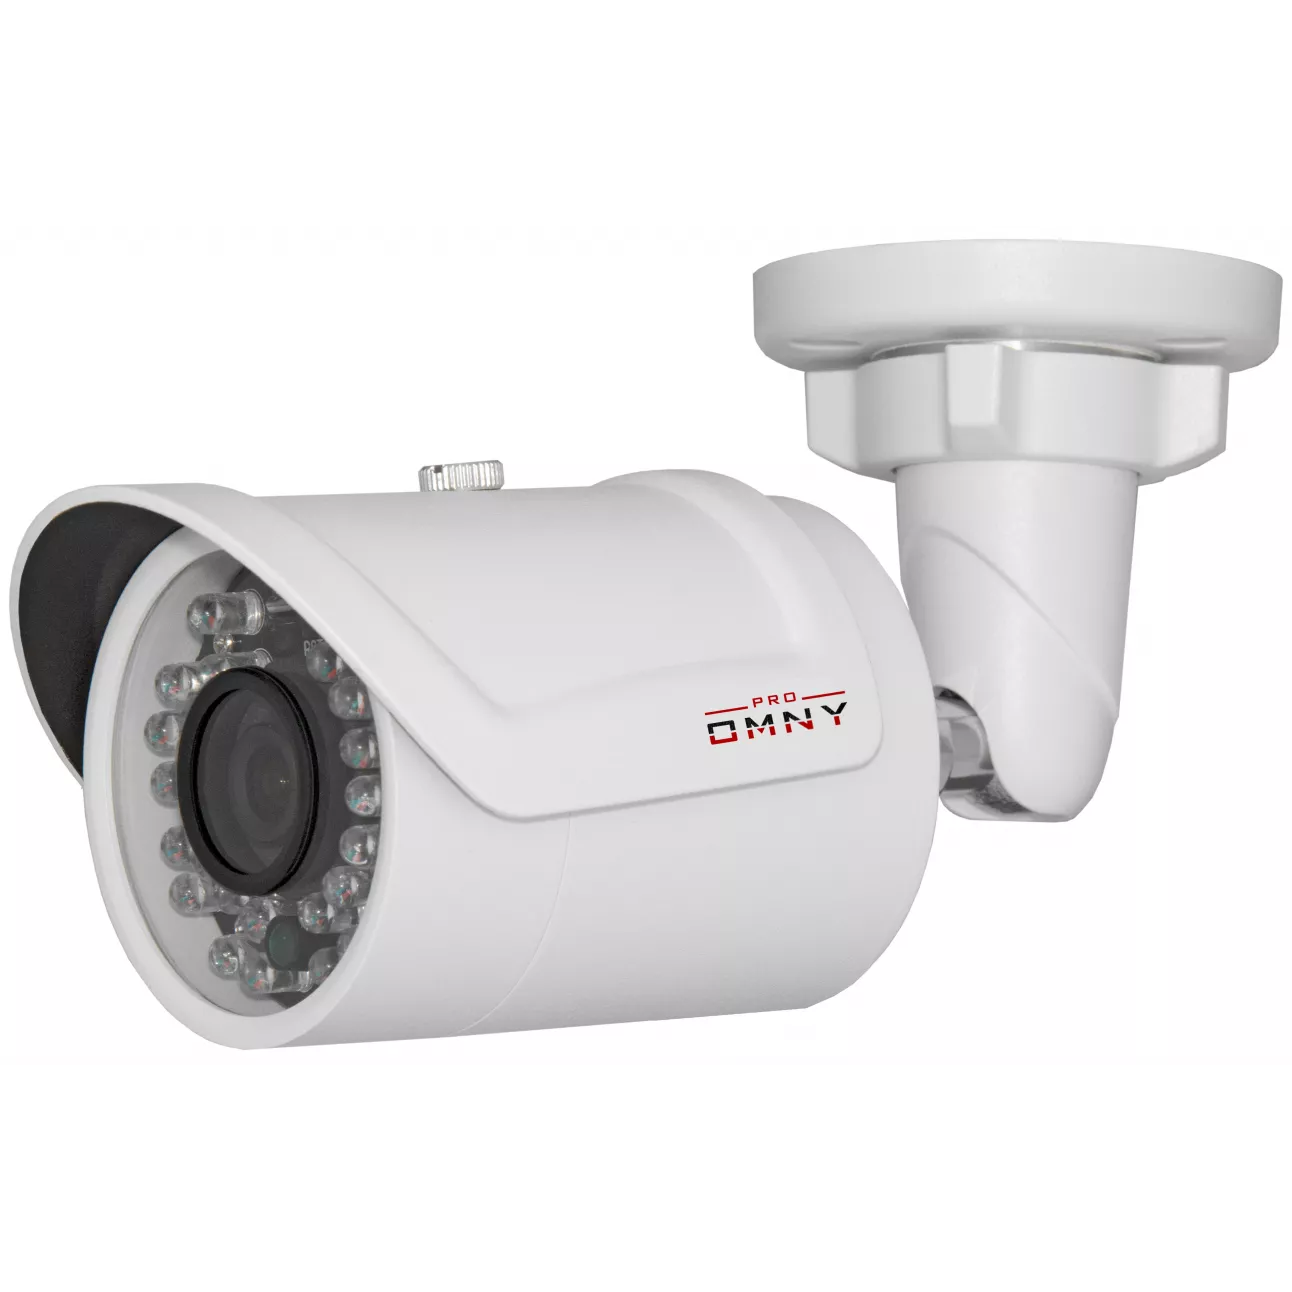 Уличная мини ip камера OMNY 100 STARLIGHT HD 1.3Мп, c ИК подсветкой, 3.6мм, 12В/PoE, с кронштейном